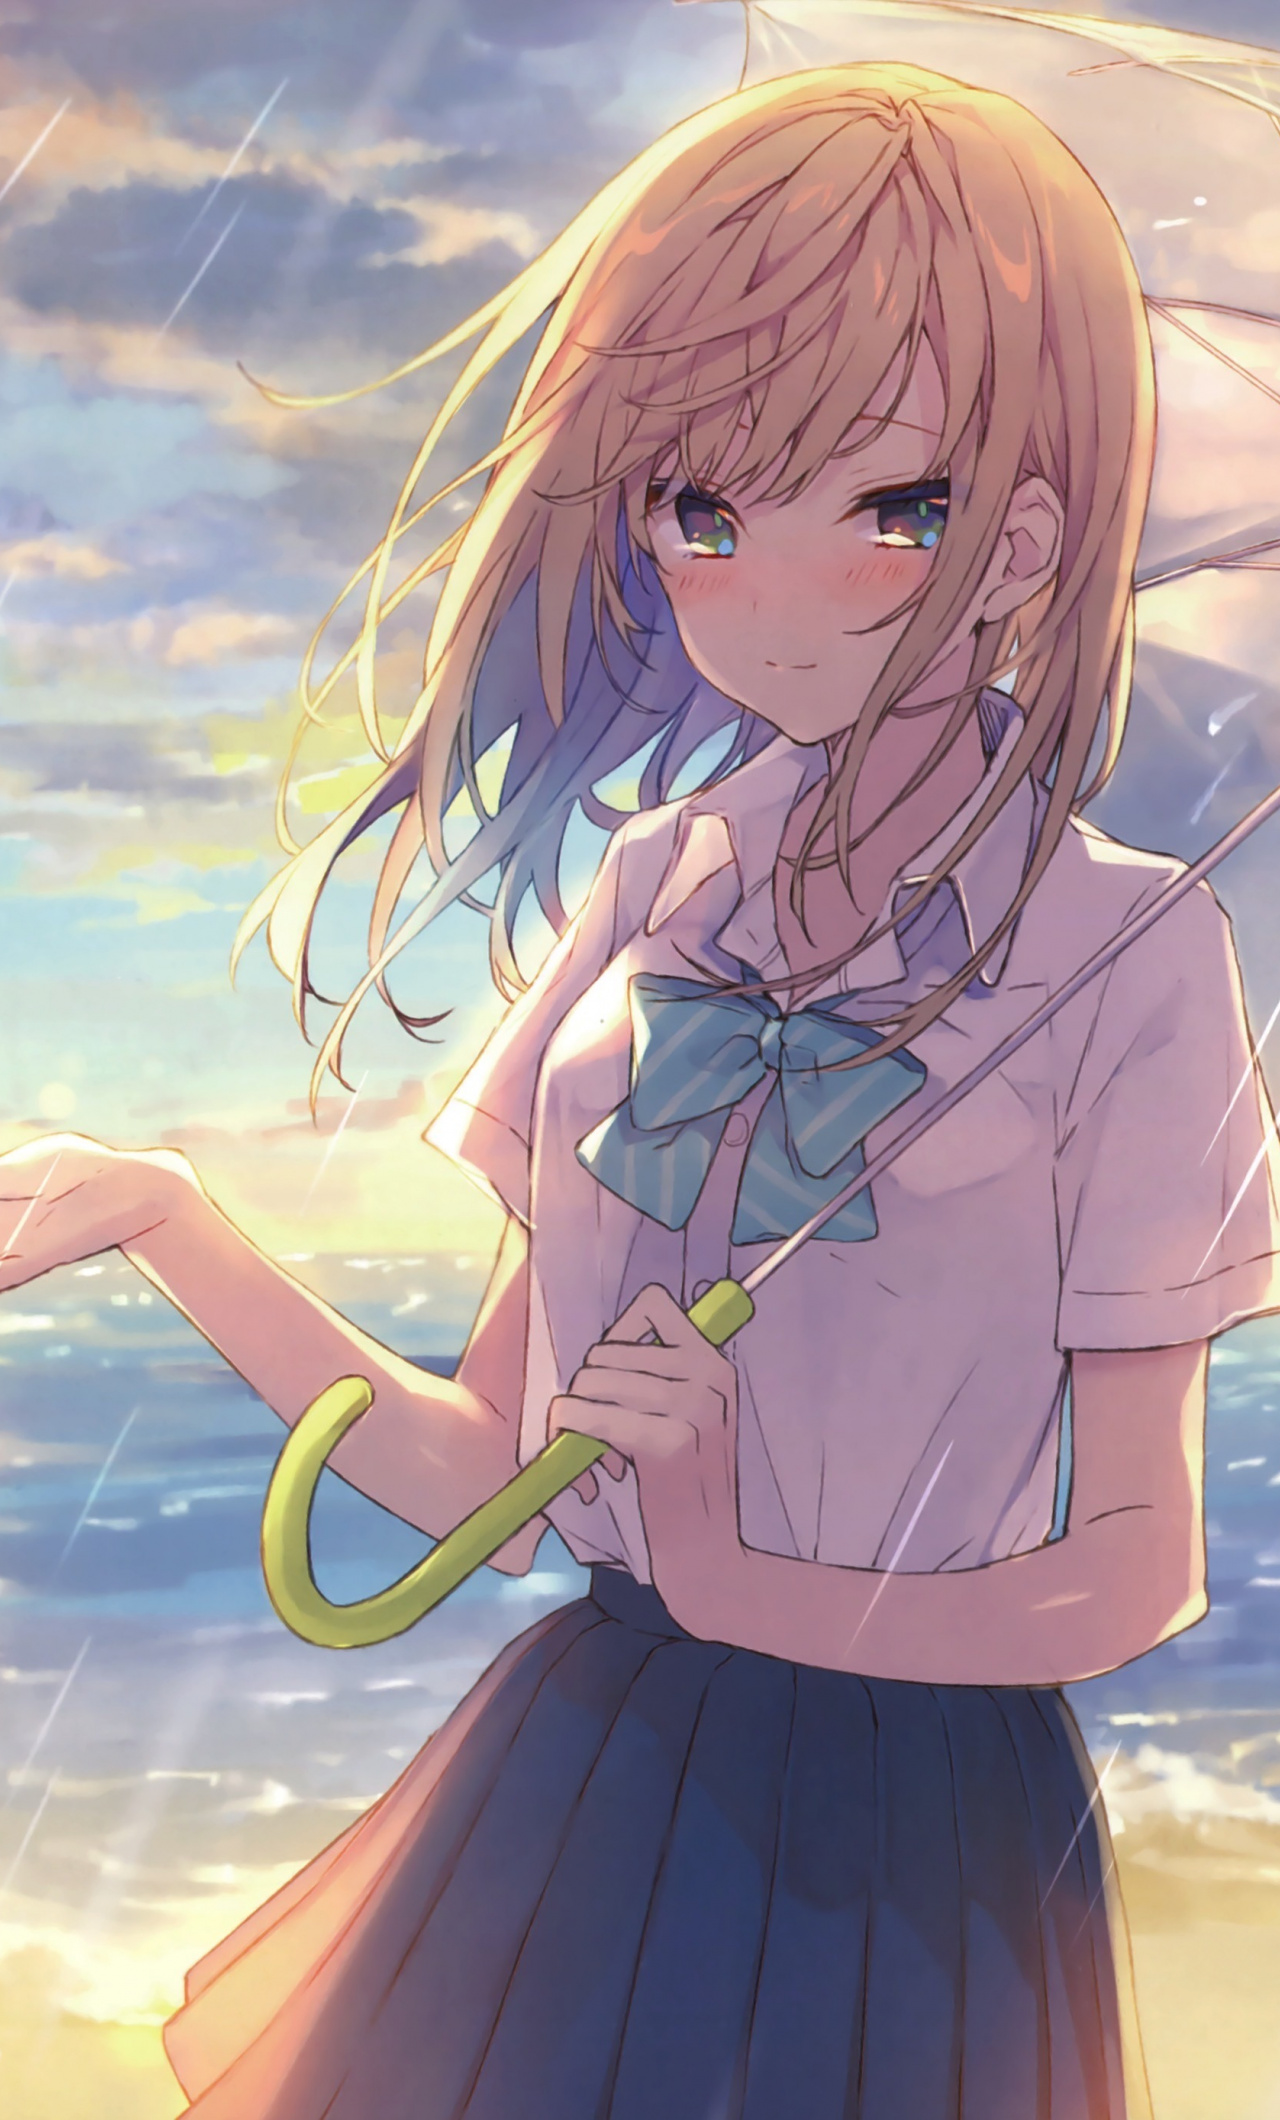 Cute Anime Girl With Umbrella gambar ke 9